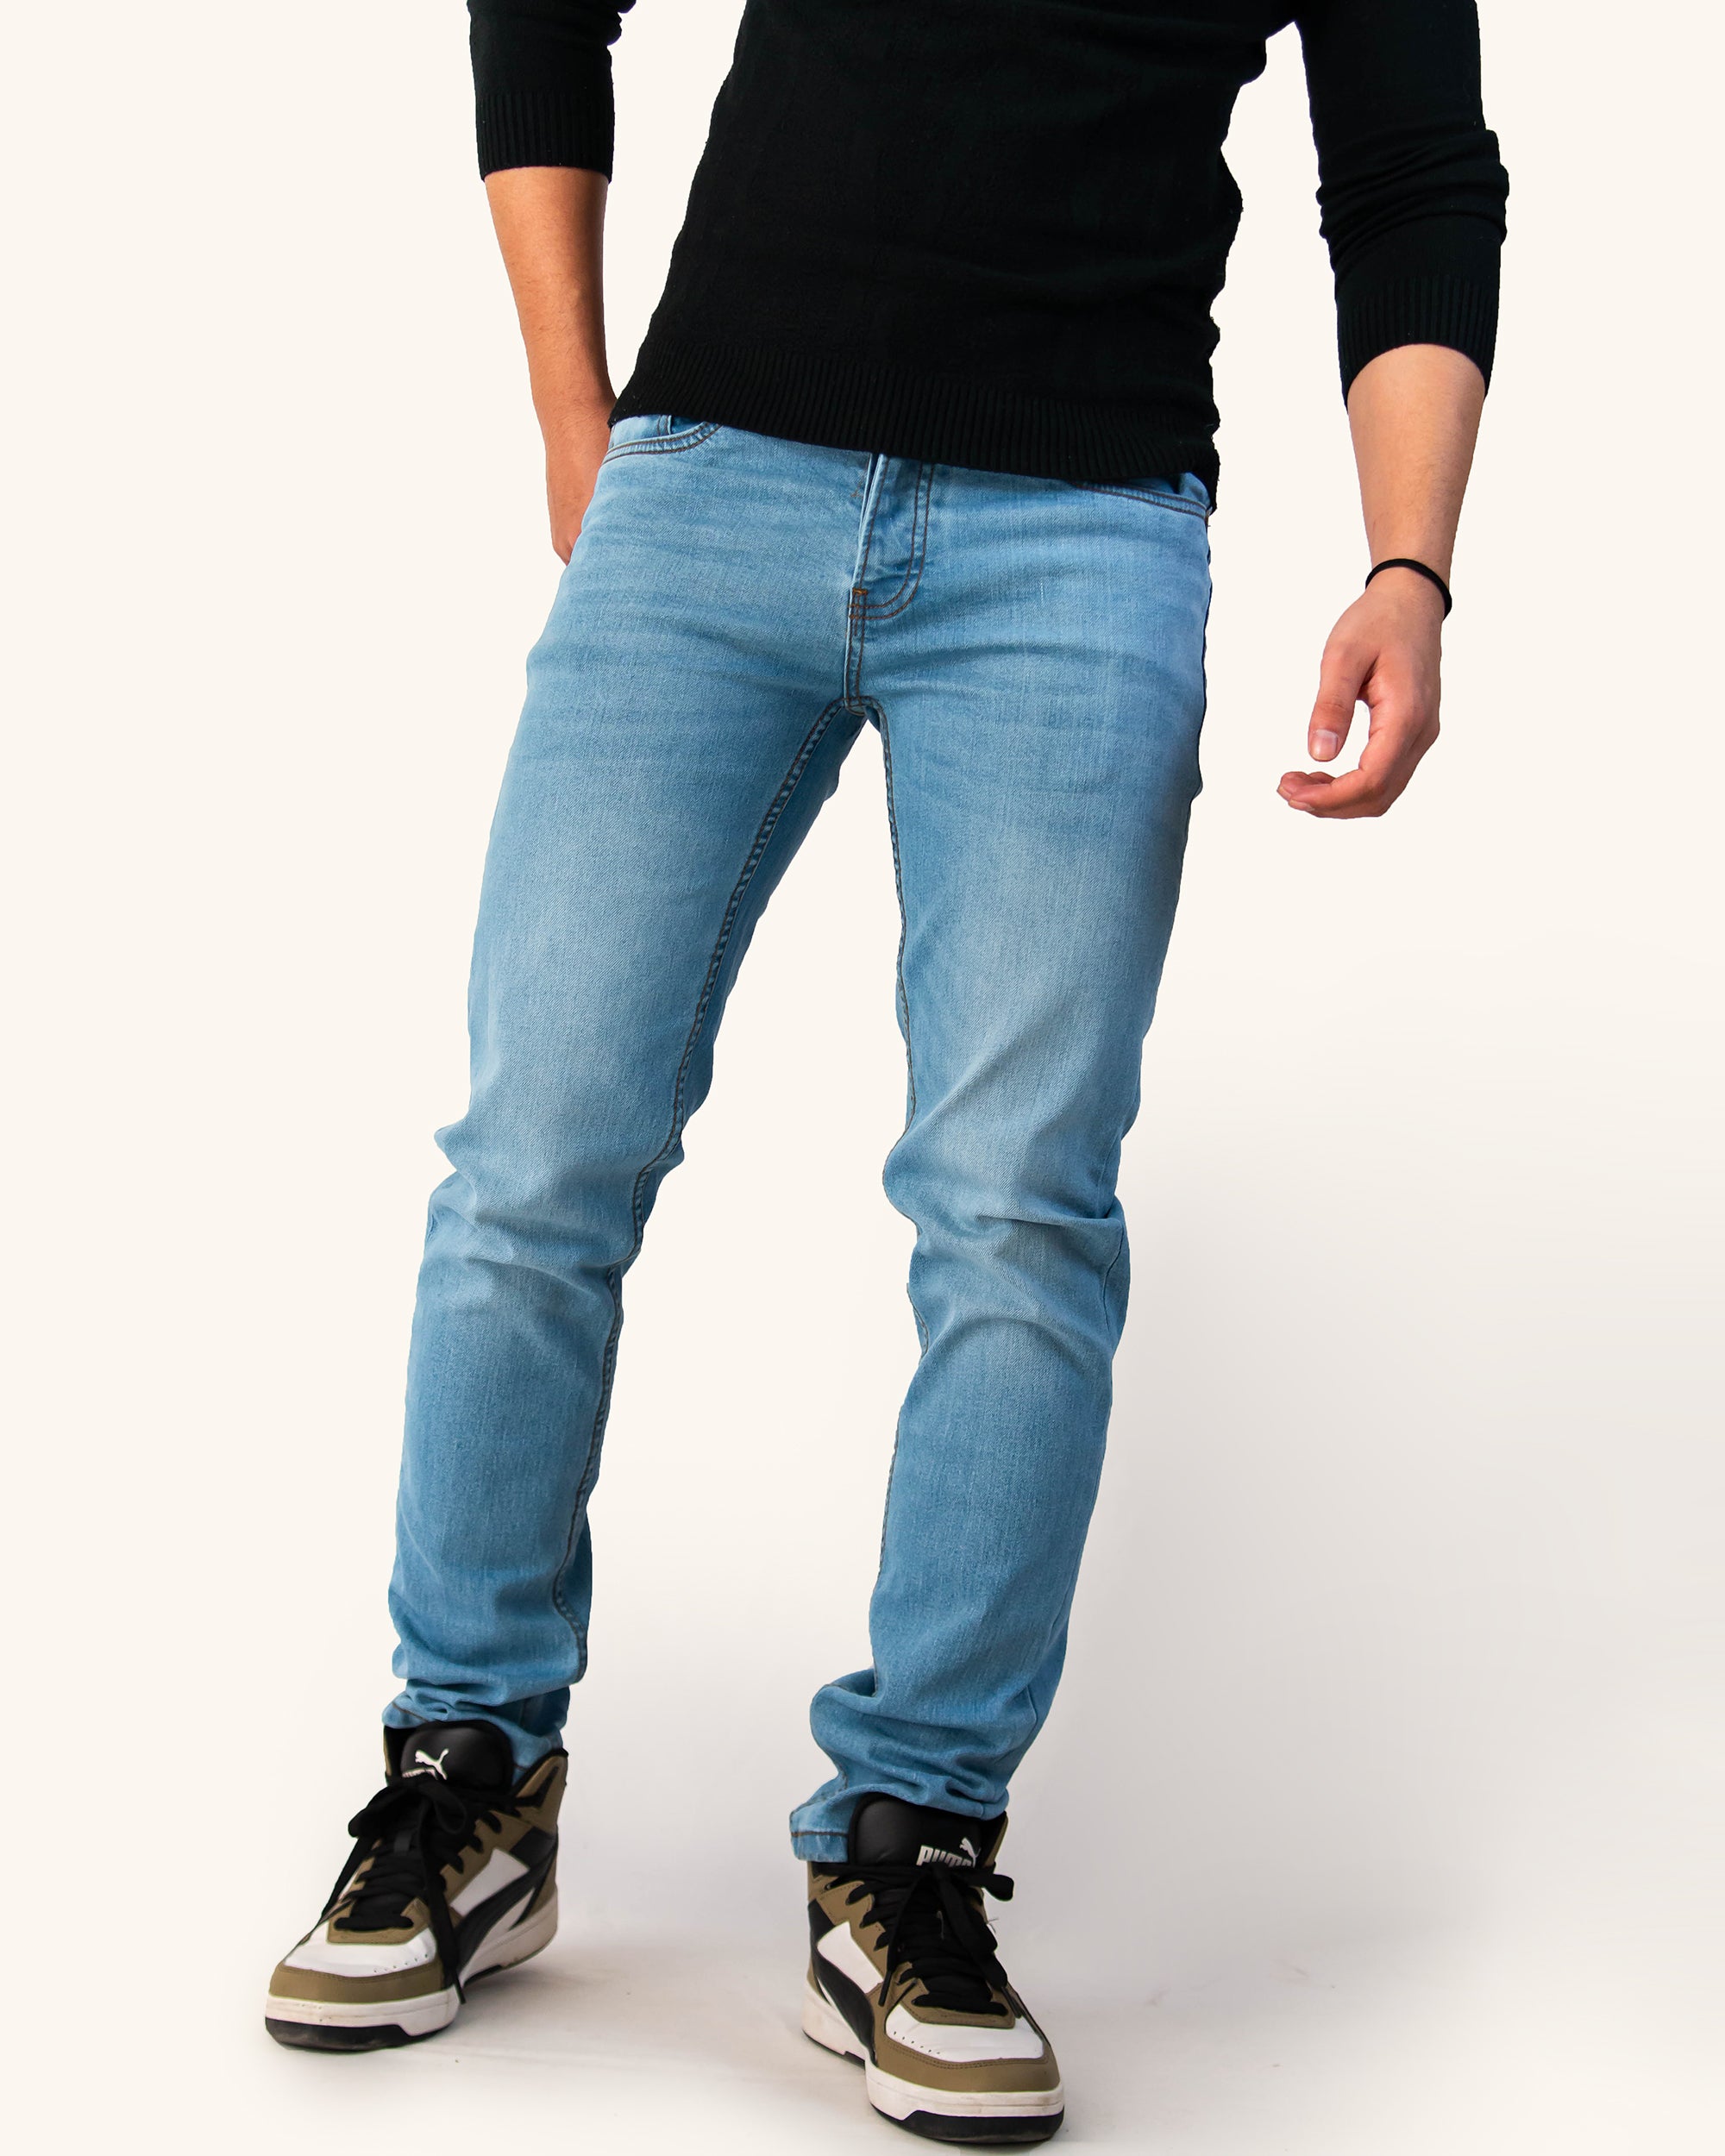 Buy men's straight camouflage stretchable jeans at best price in Pakistan |  Kayazar.com | Black jeans men, Slim fit men, Camouflage